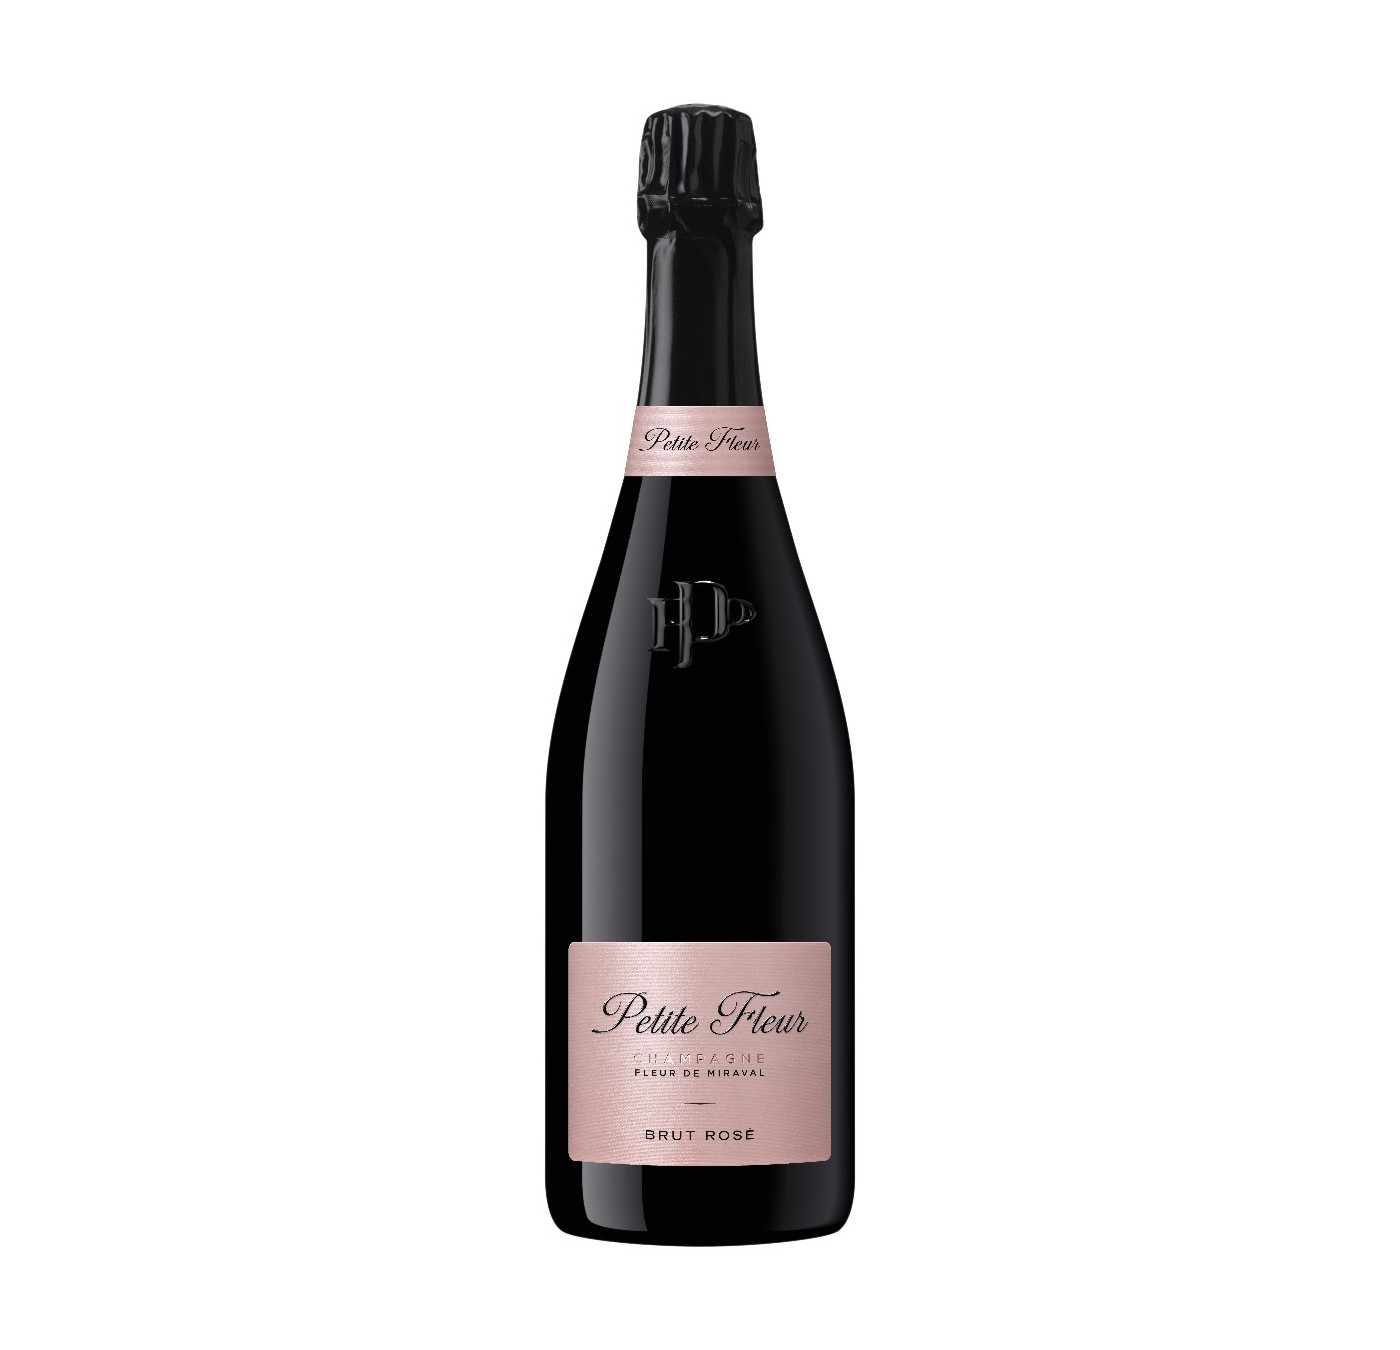 Brad Pitt Launches “Petite Fleur”, His New Champagne Cuvée - Wine Industry  Advisor